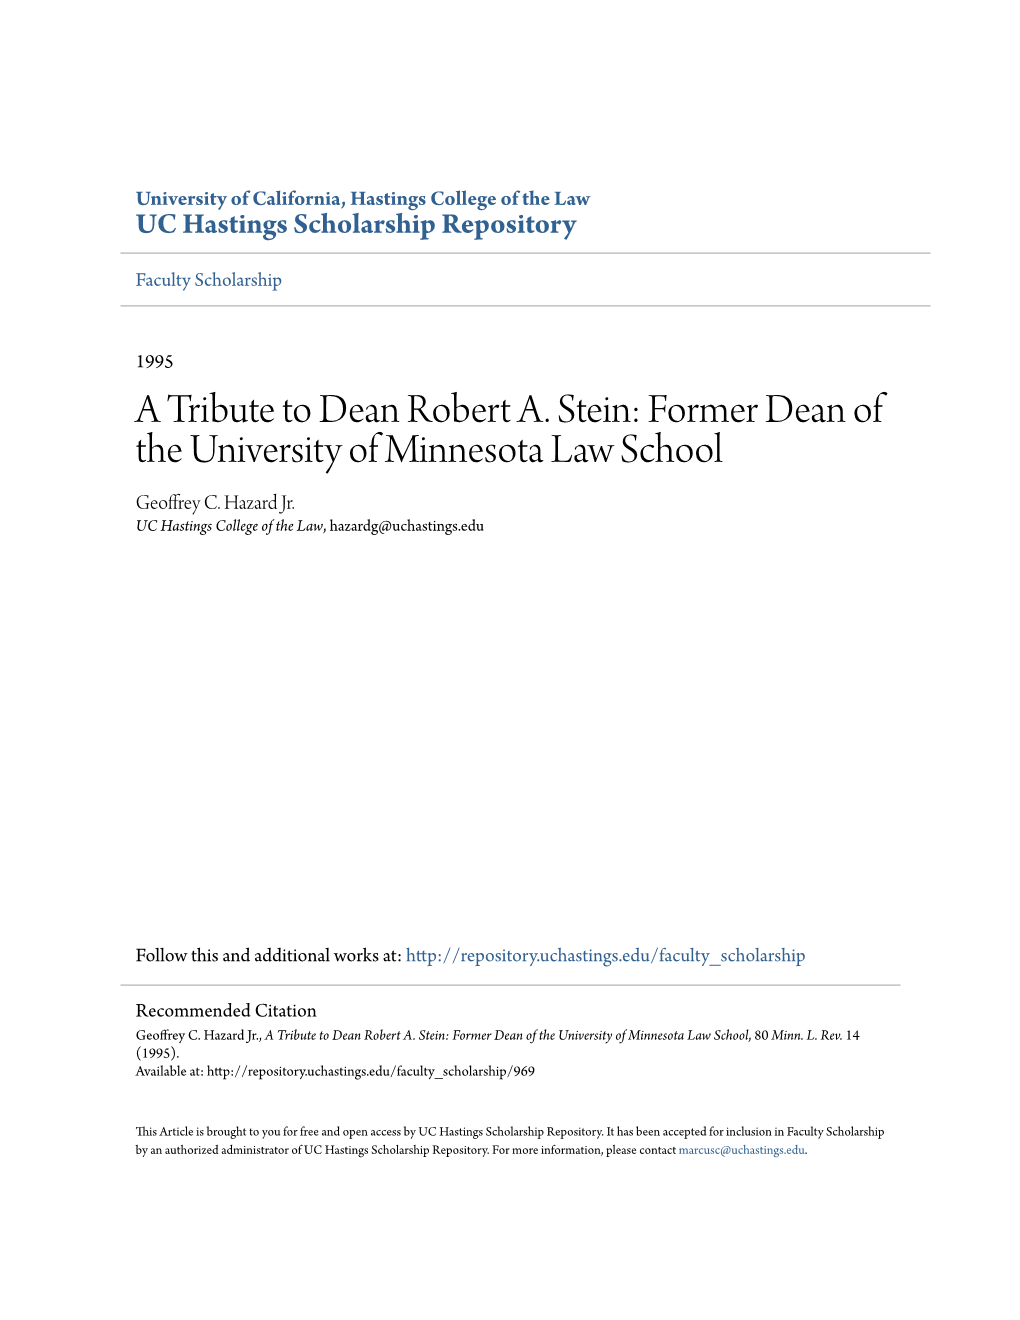 A Tribute to Dean Robert A. Stein: Former Dean of the University of Minnesota Law School Geoffrey C